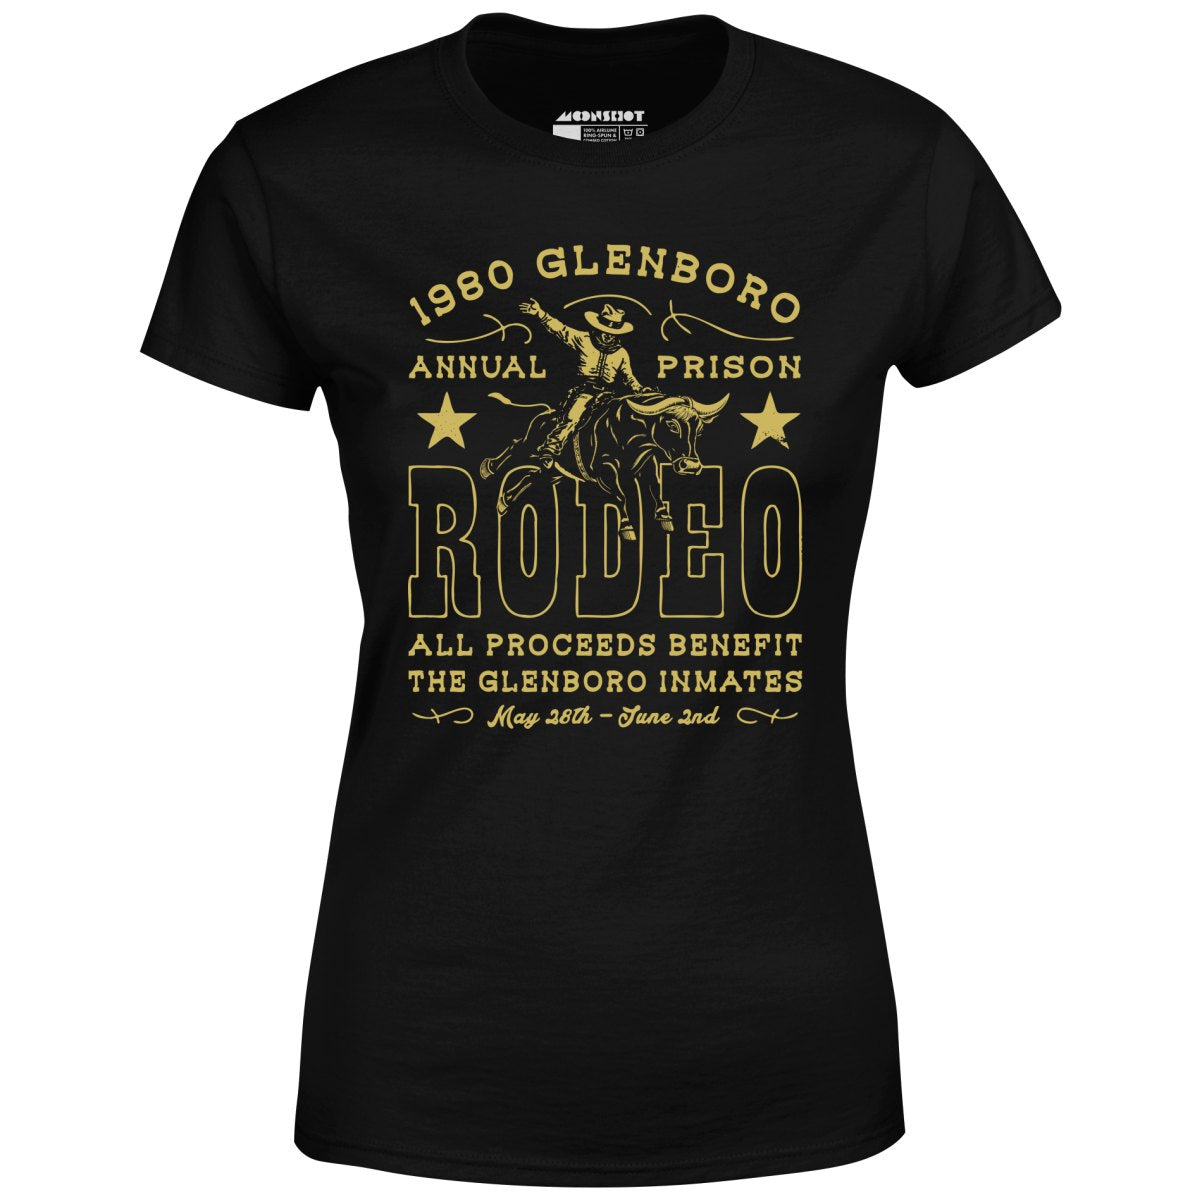 1980 Glenboro Annual Prison Rodeo - Women's T-Shirt